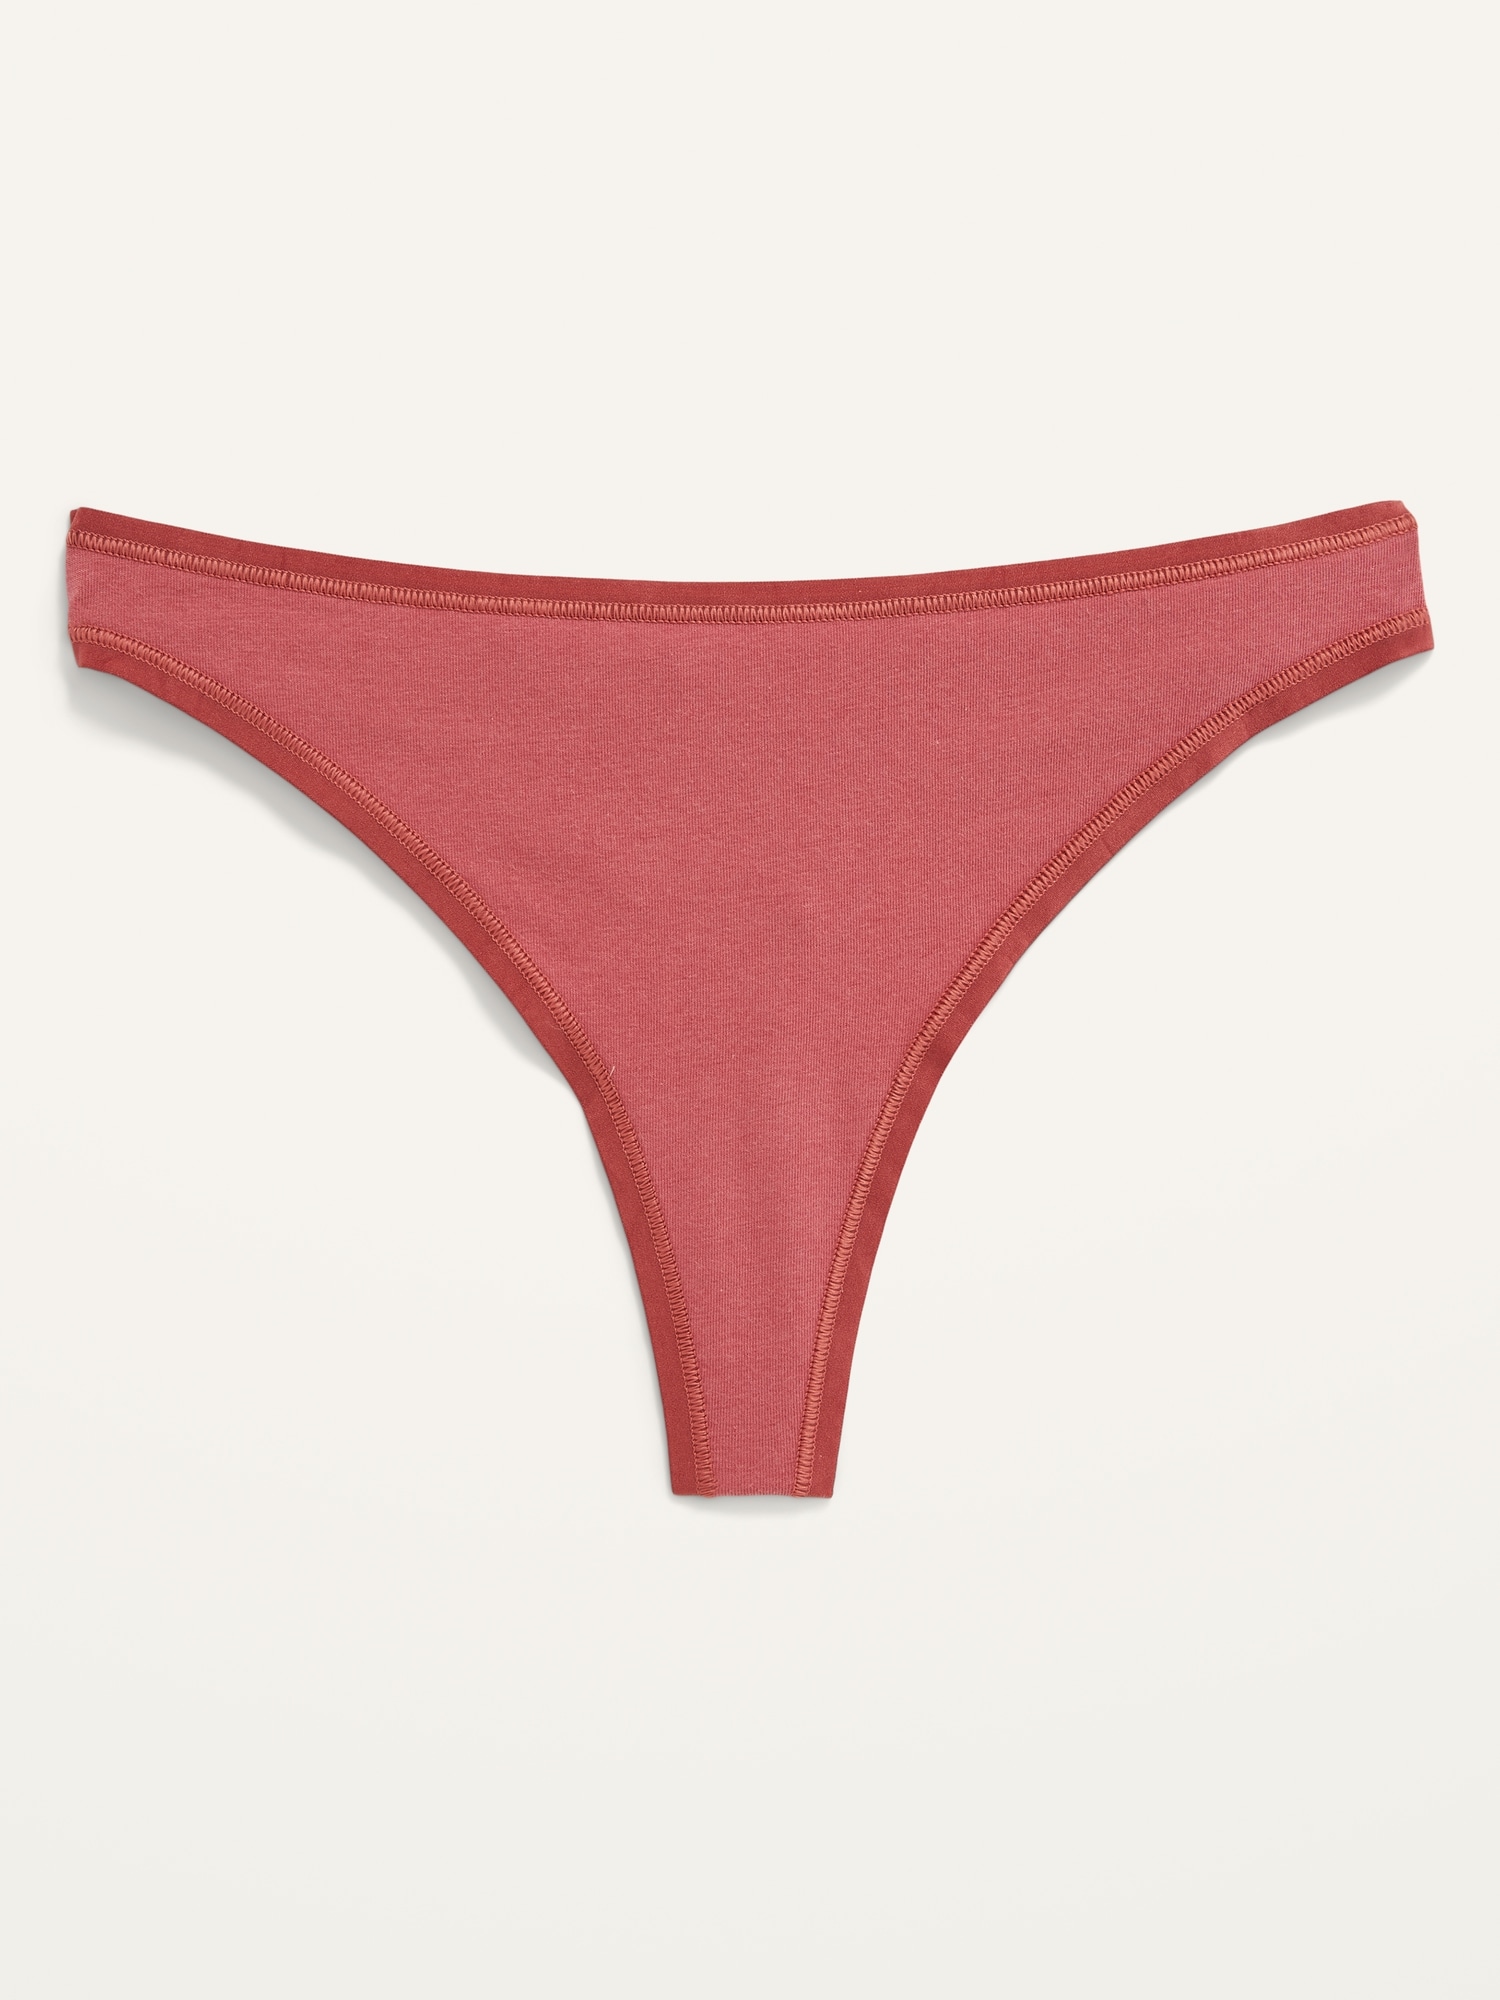 Jersey Thong Underwear for Women